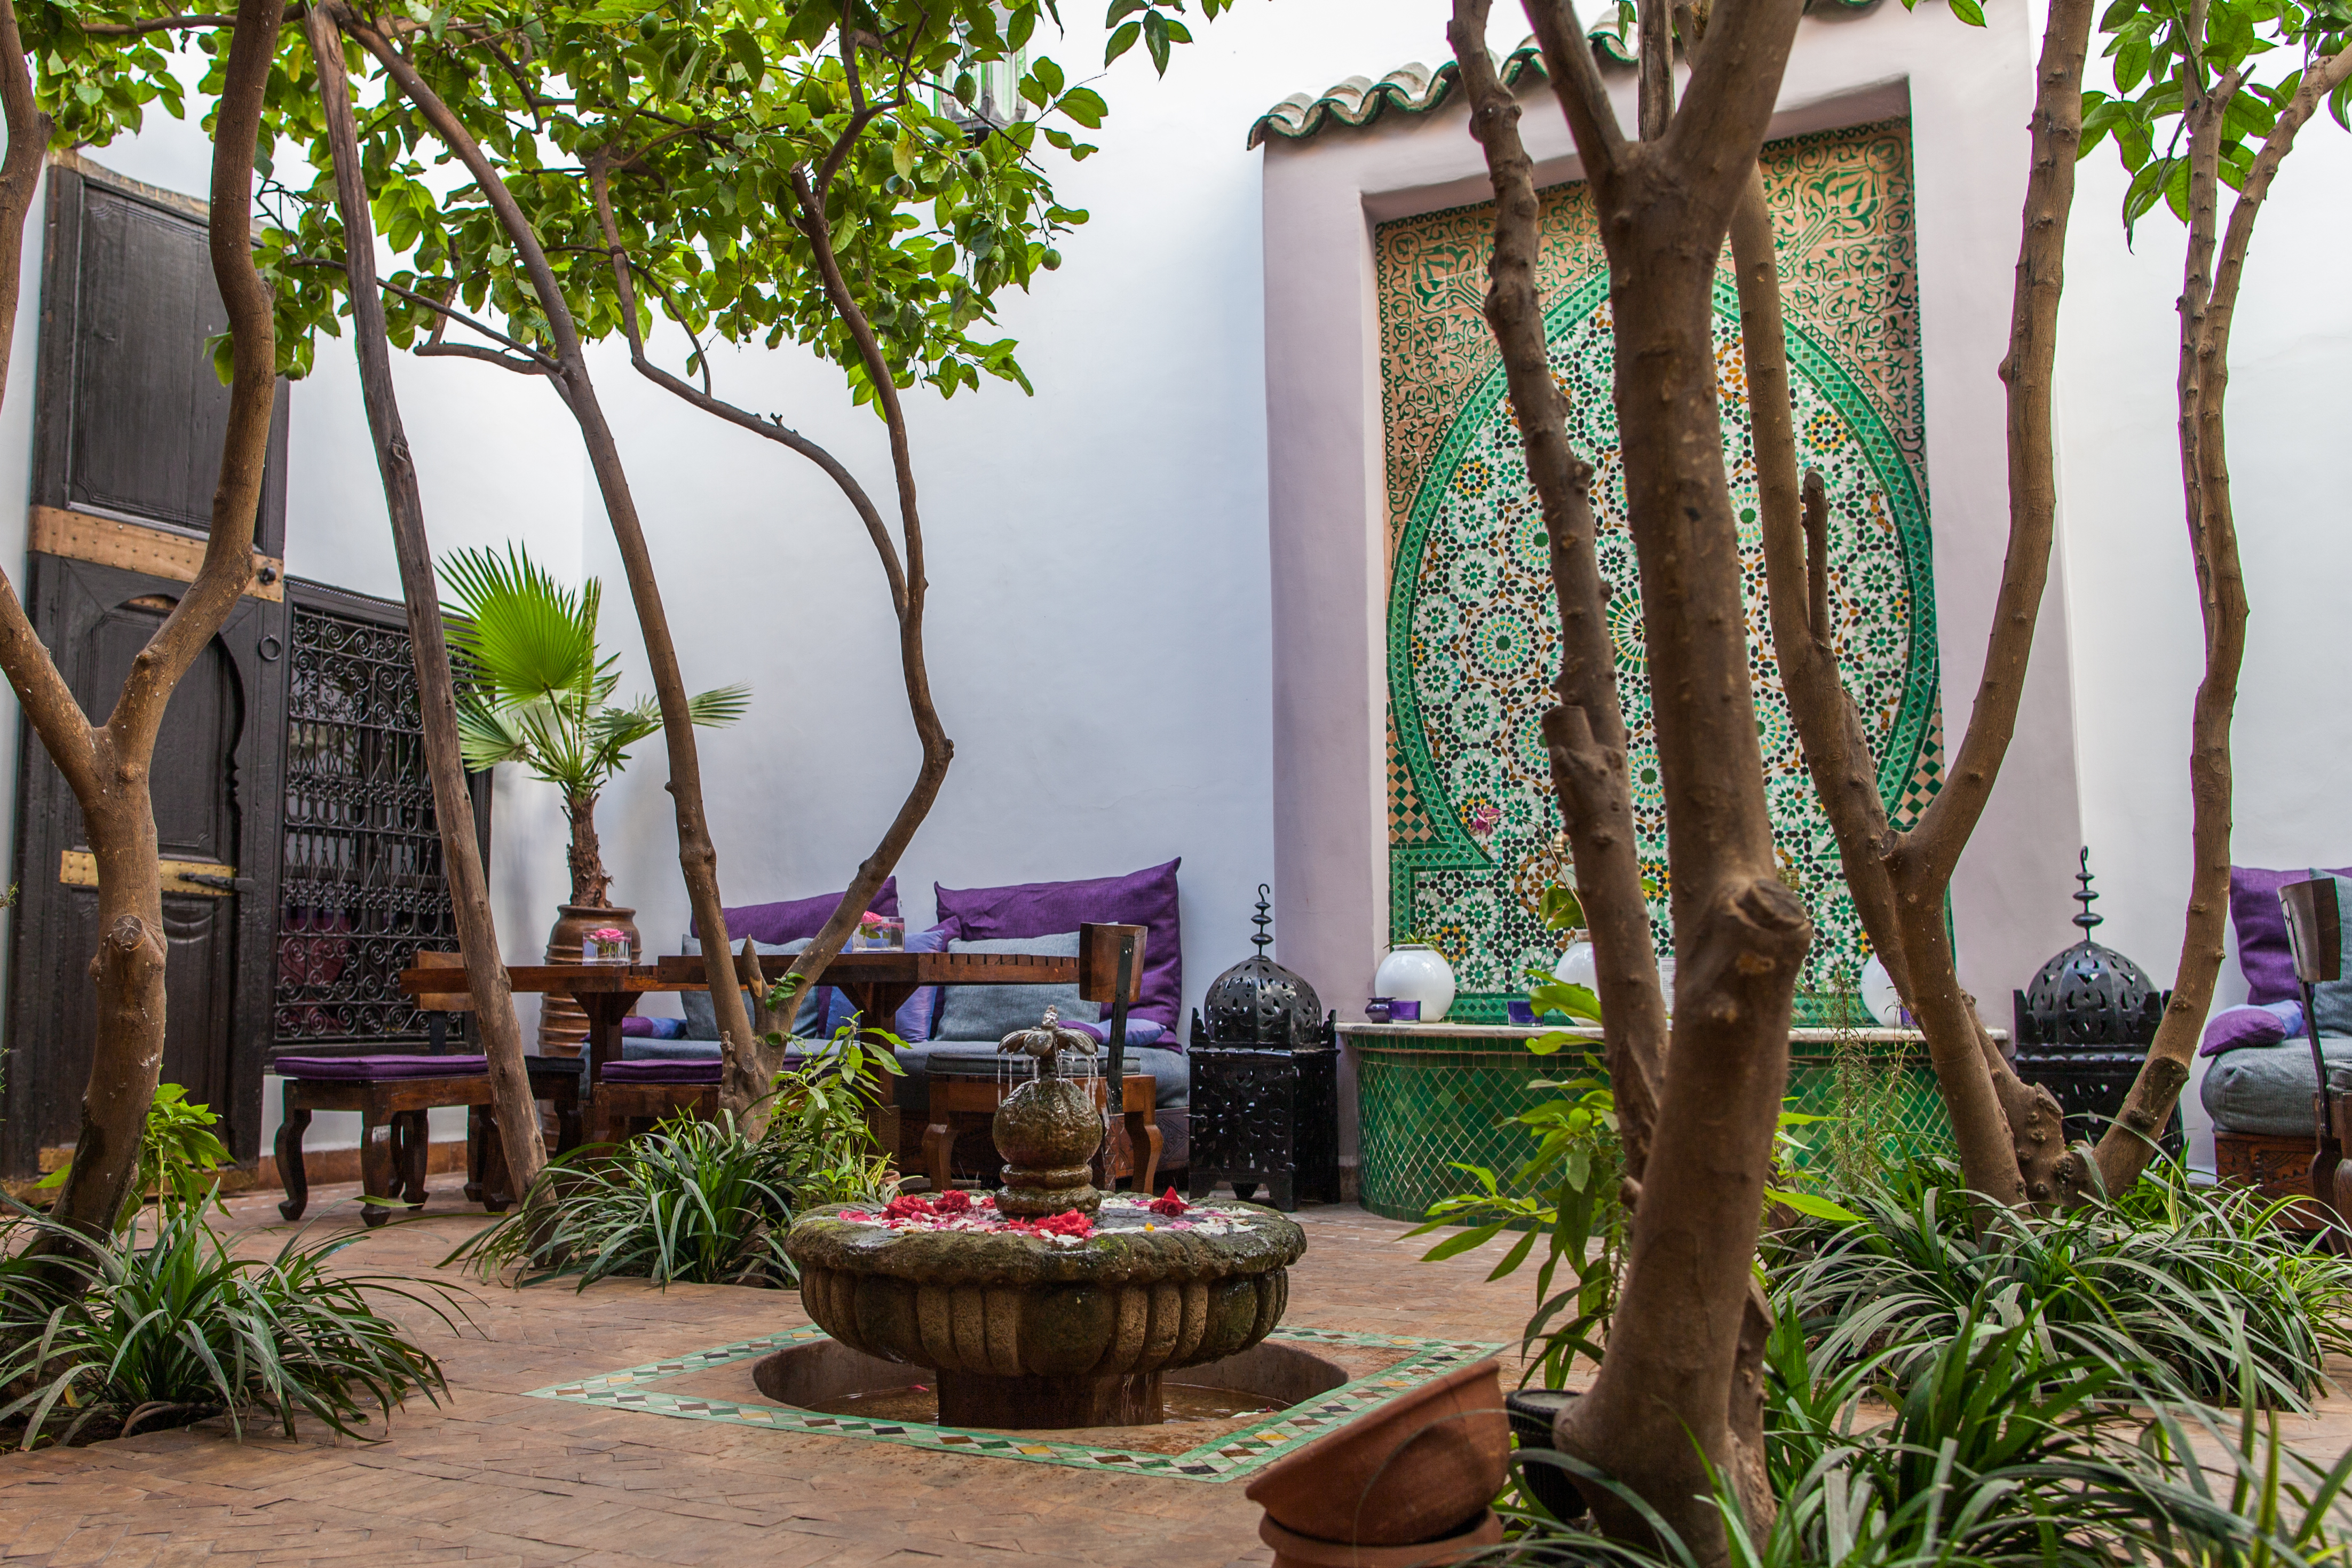 Colourful Moroccan garden with a wall fountain